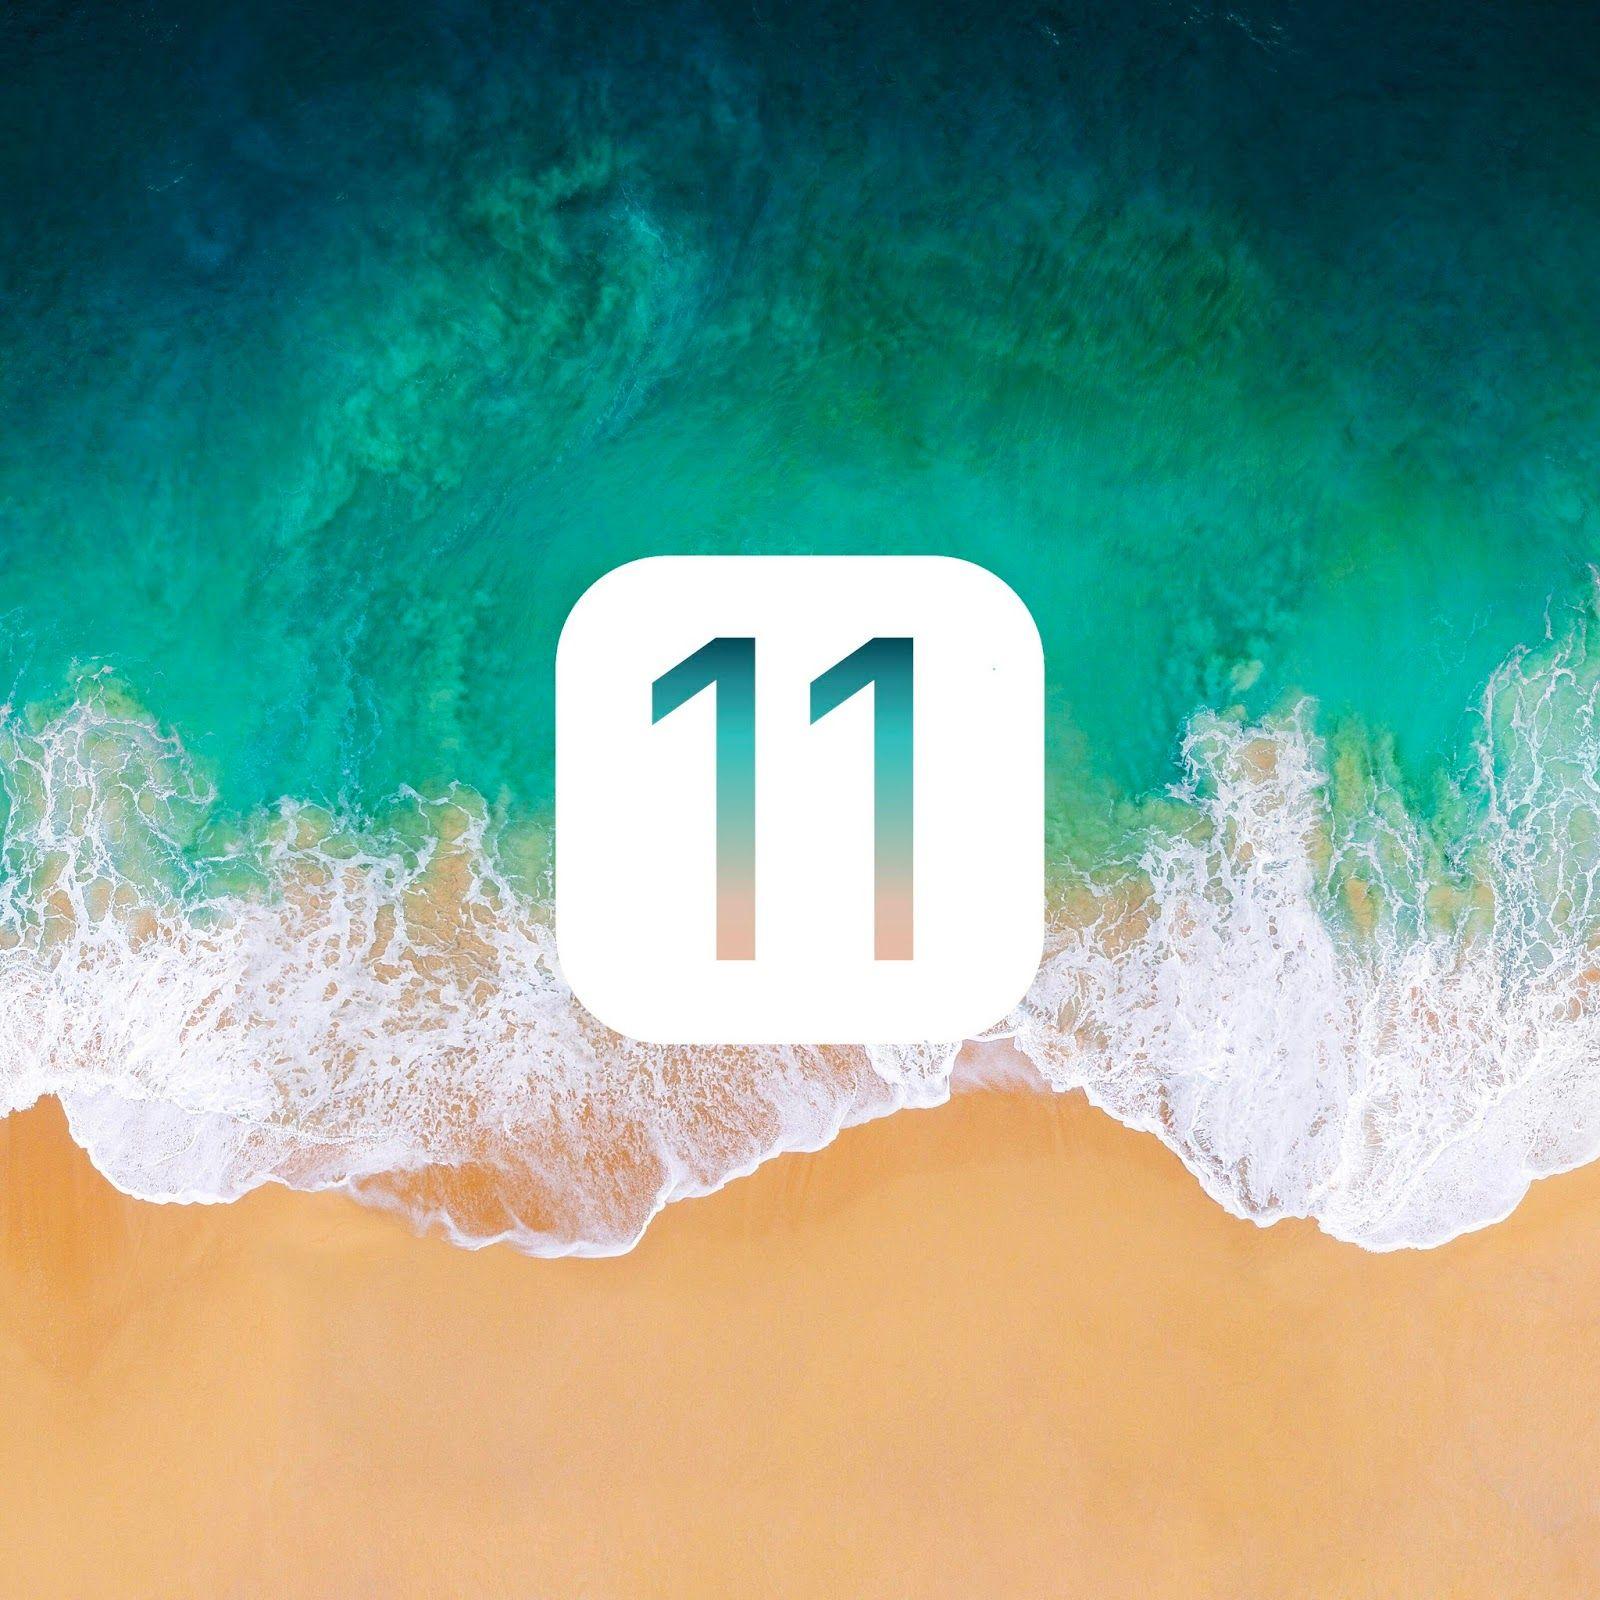 Download iOS 11 Wallpaper iPhone / iPad HD resolution